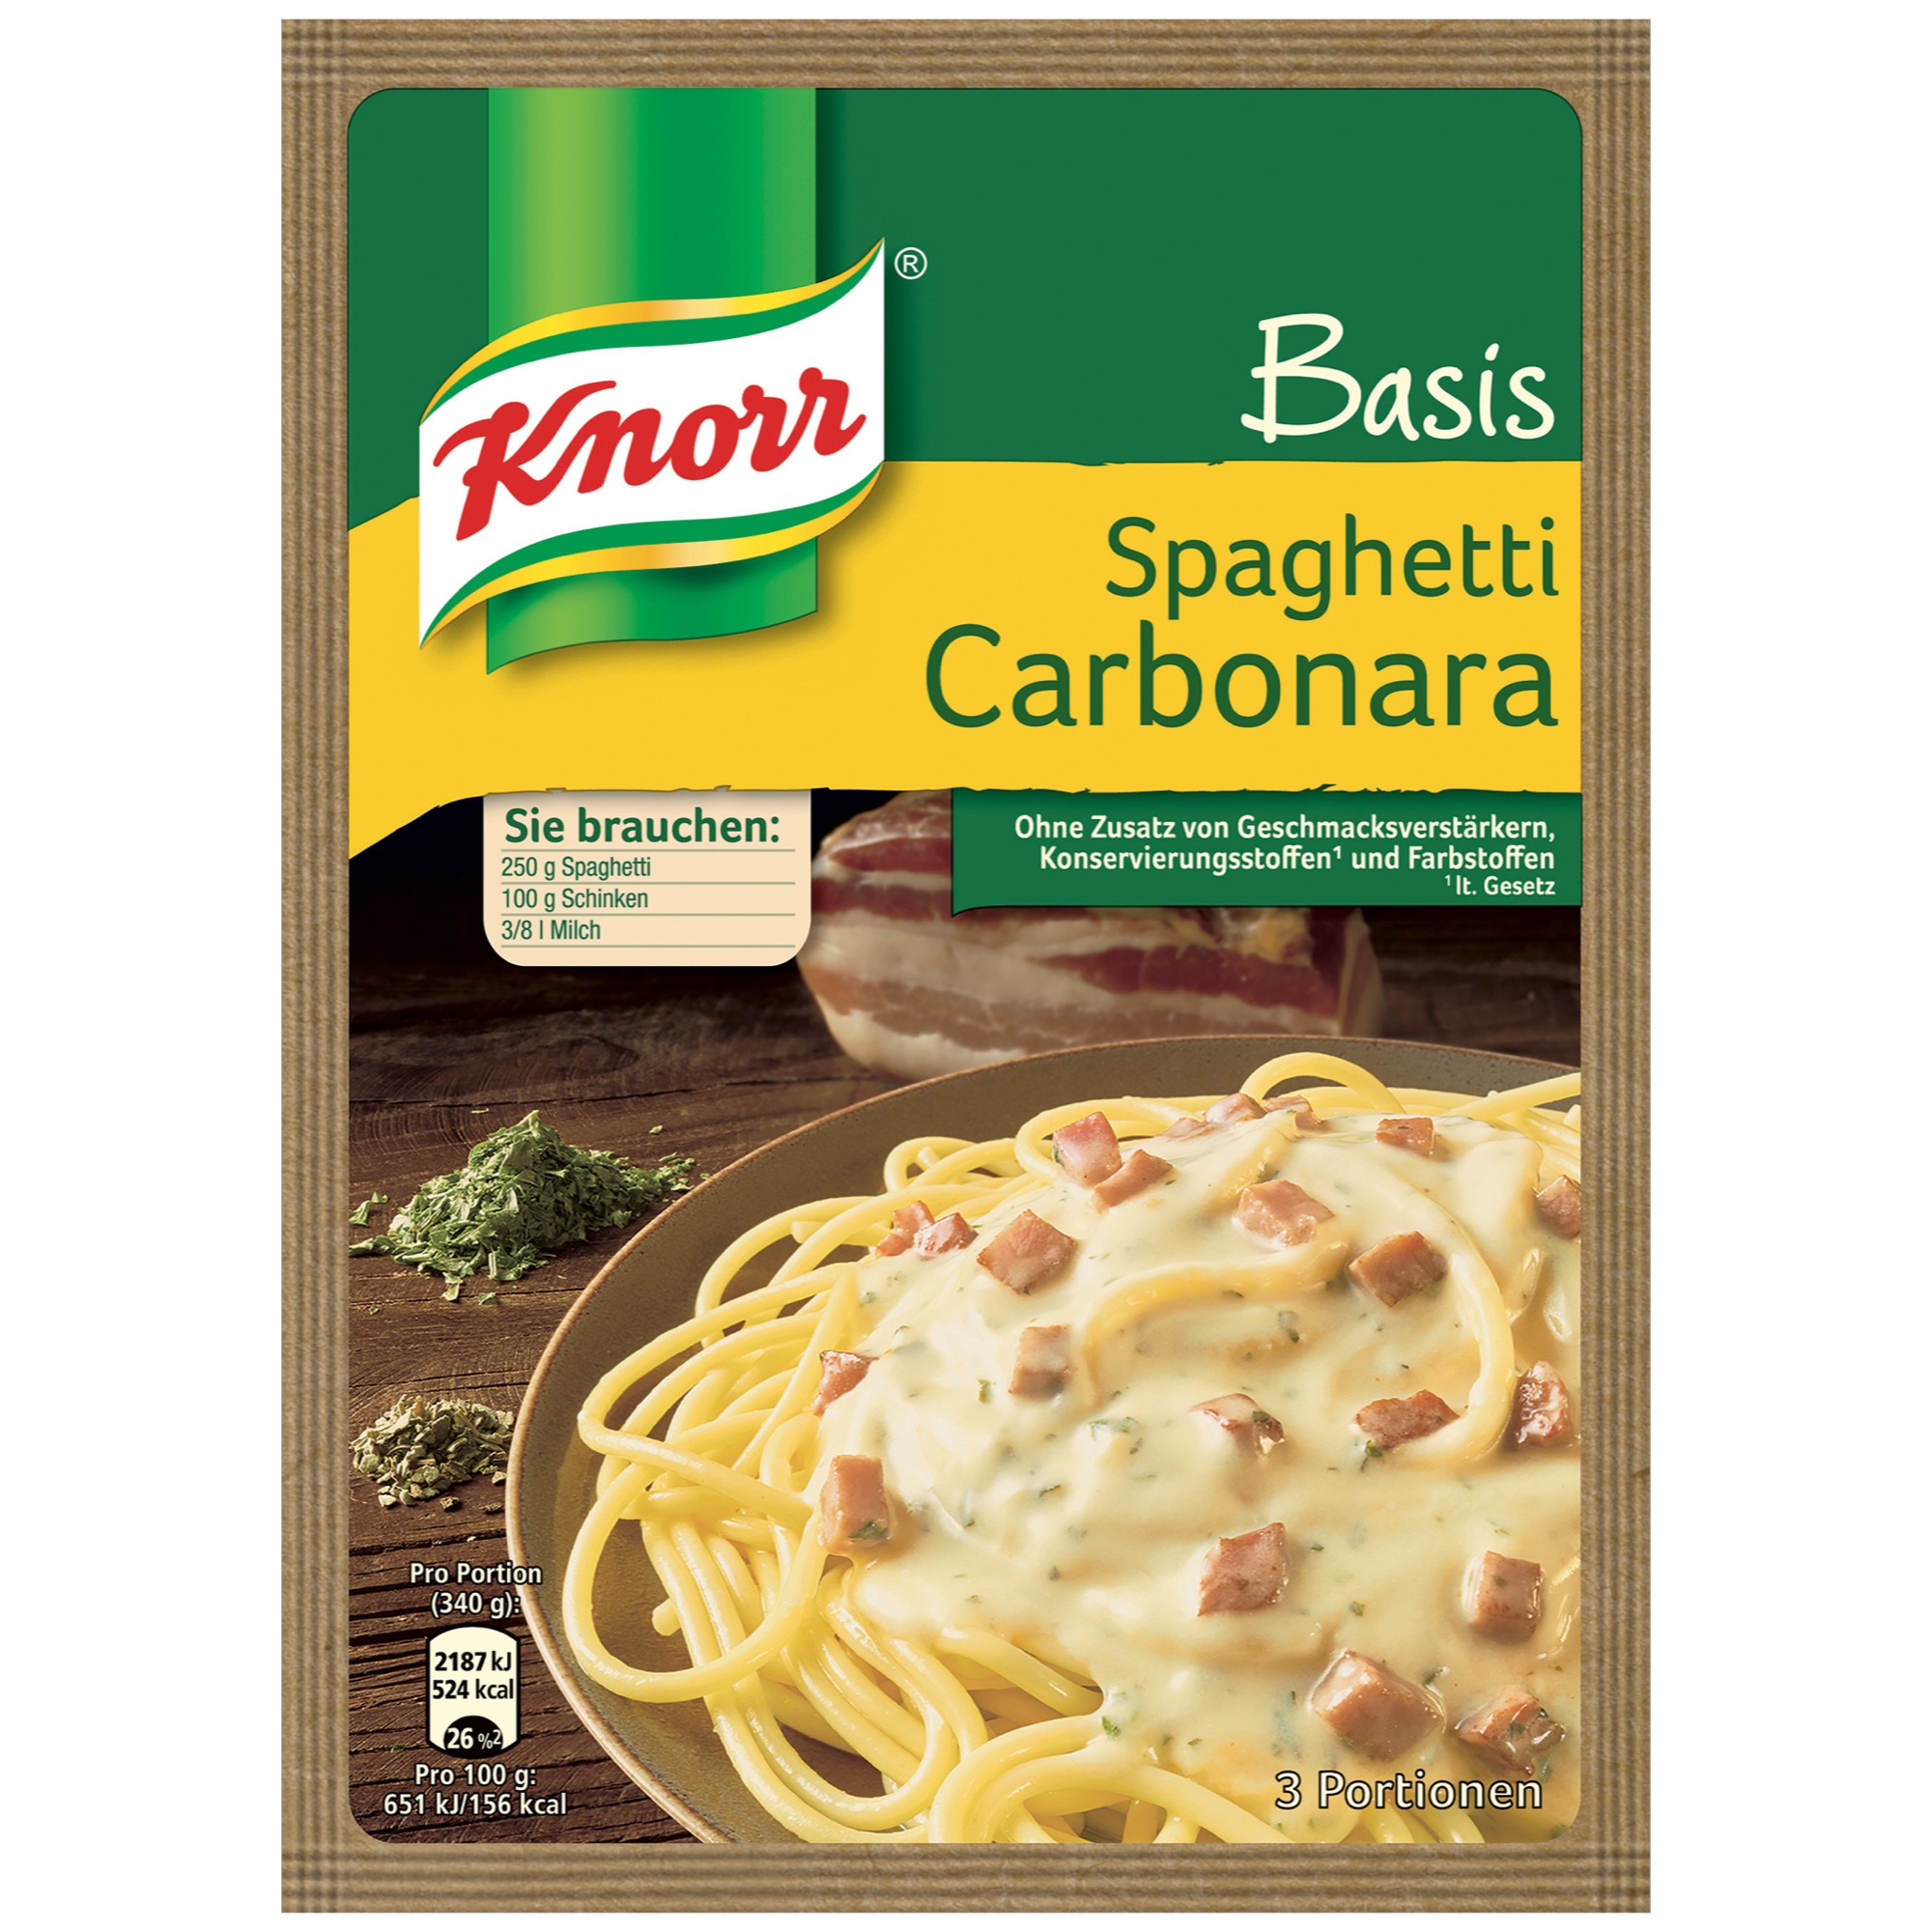 Knorr Basis Spaghetti Carbonara